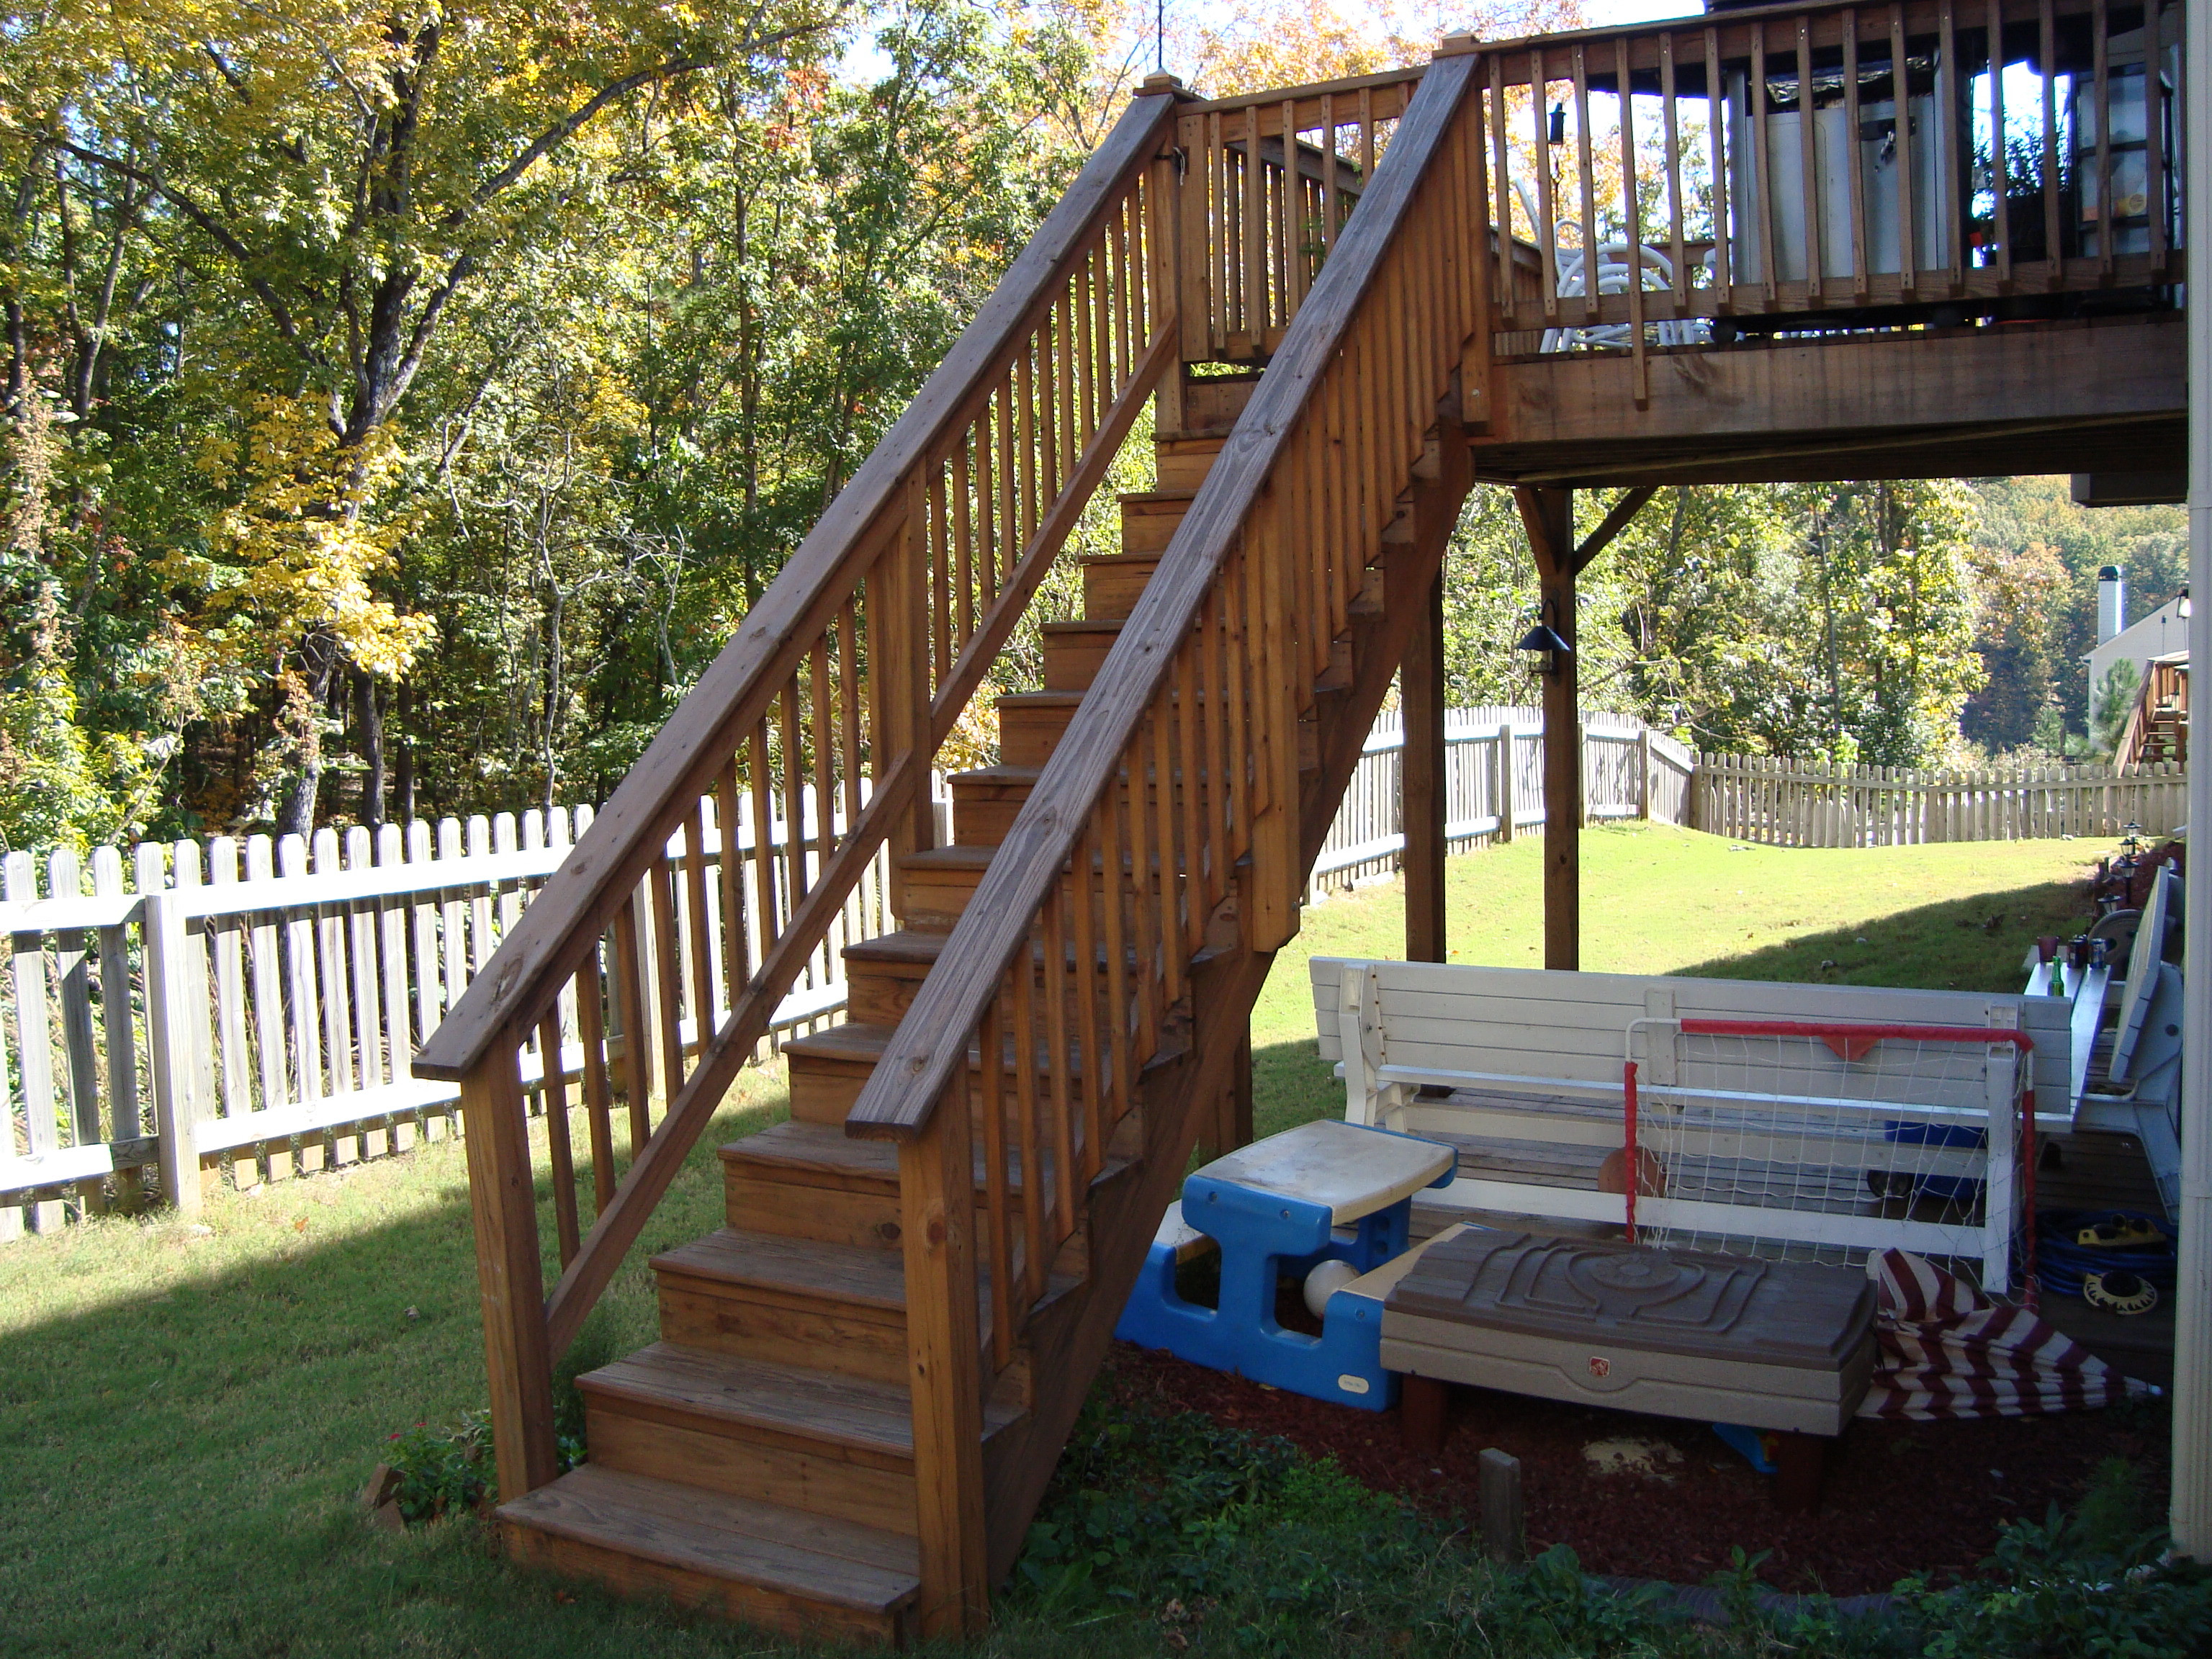 Best ideas about Deck Stair Railing
. Save or Pin ChemE Construction Inc Decks & Railings Now.